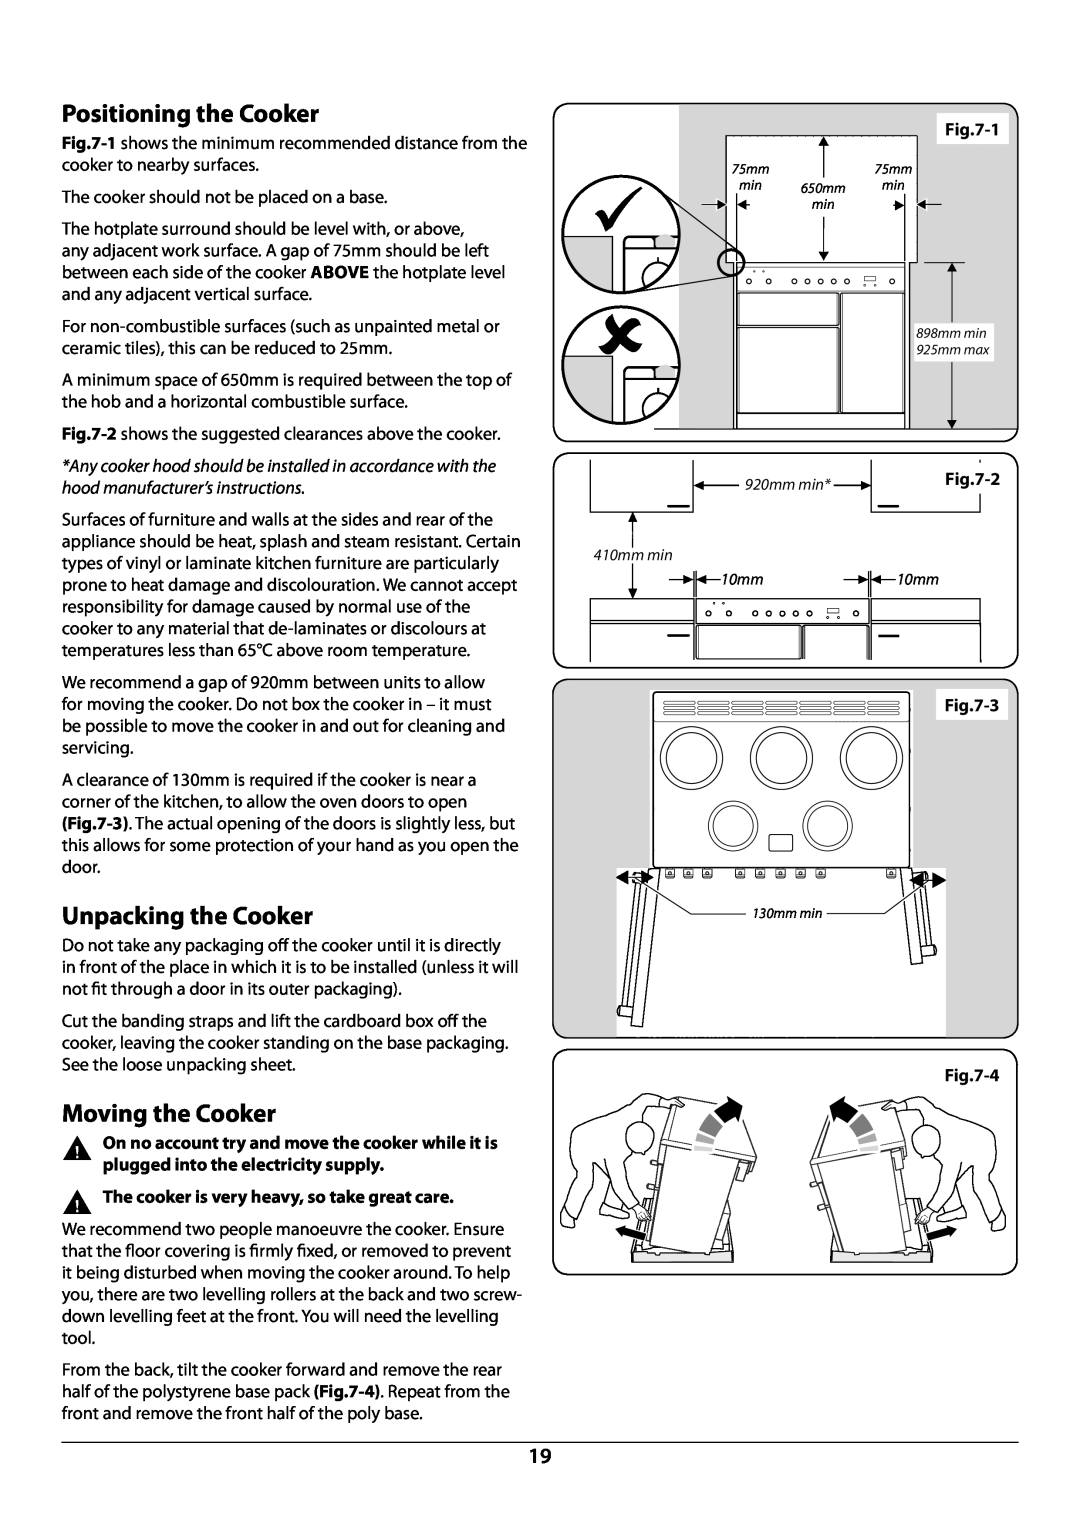 Rangemaster U109941 - 02 manual Positioning the Cooker, Unpacking the Cooker, Moving the Cooker, 3 